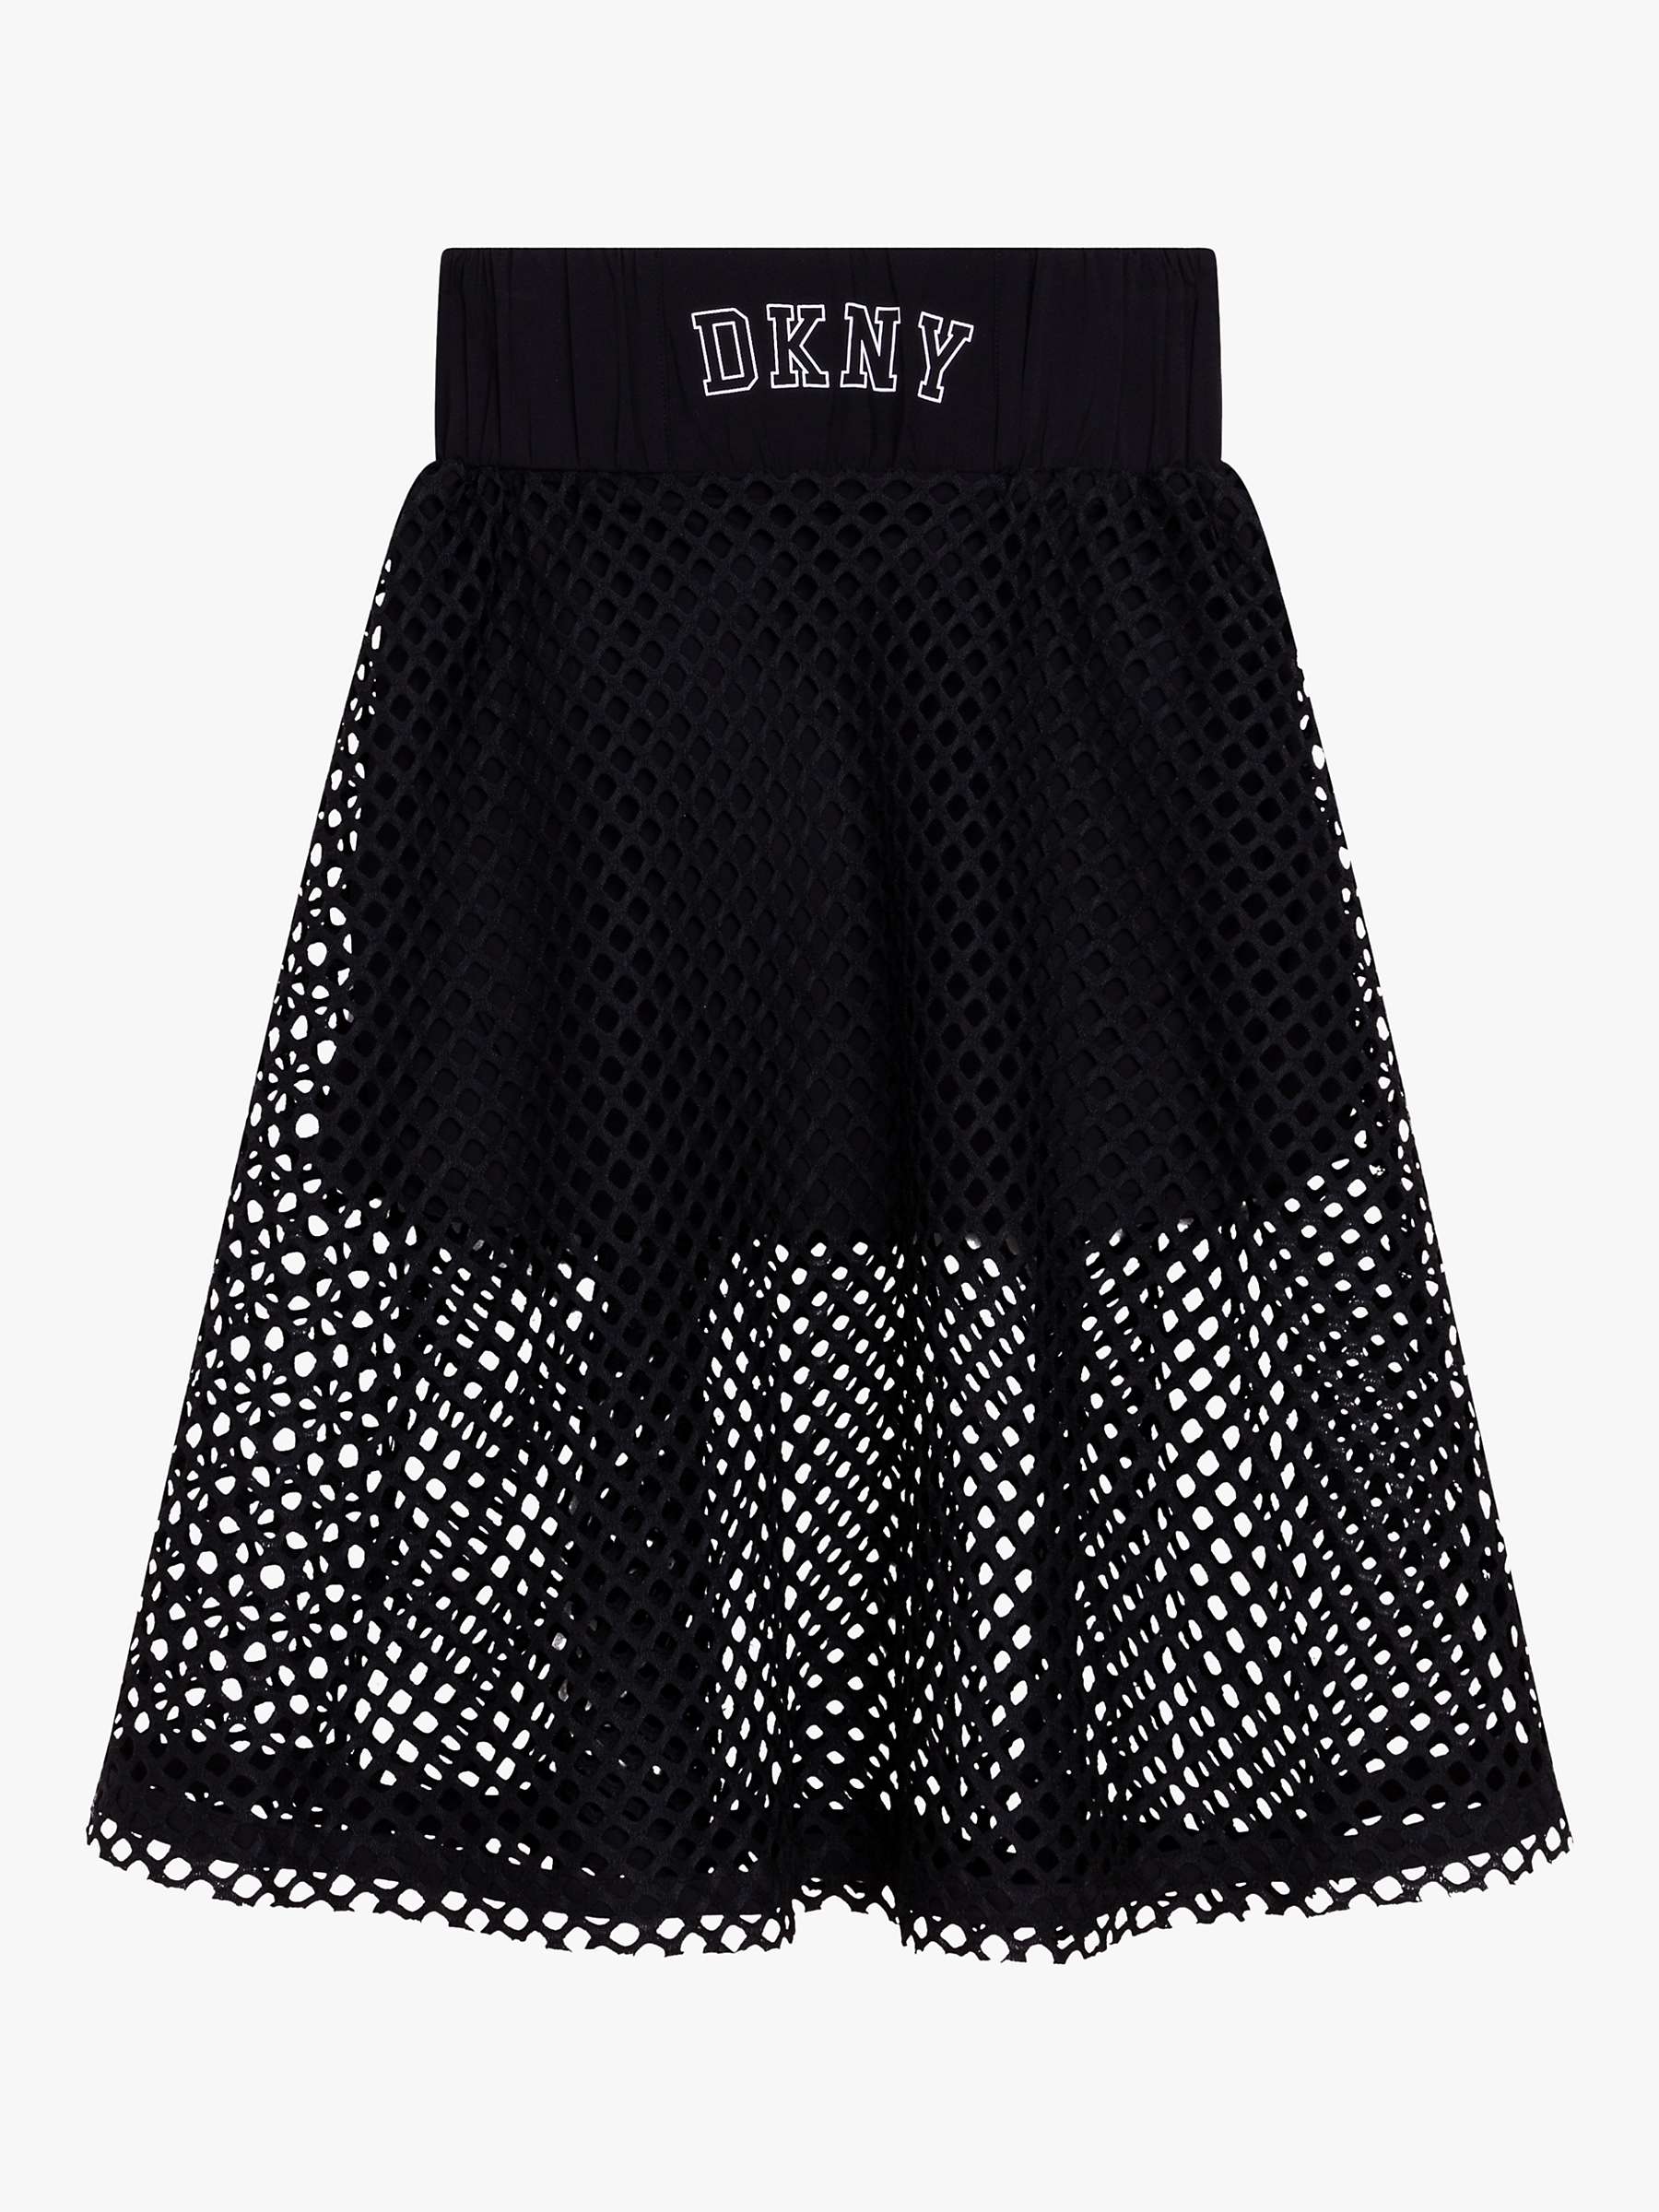 DKNY Kids' Mesh Skirt, Black at John Lewis & Partners